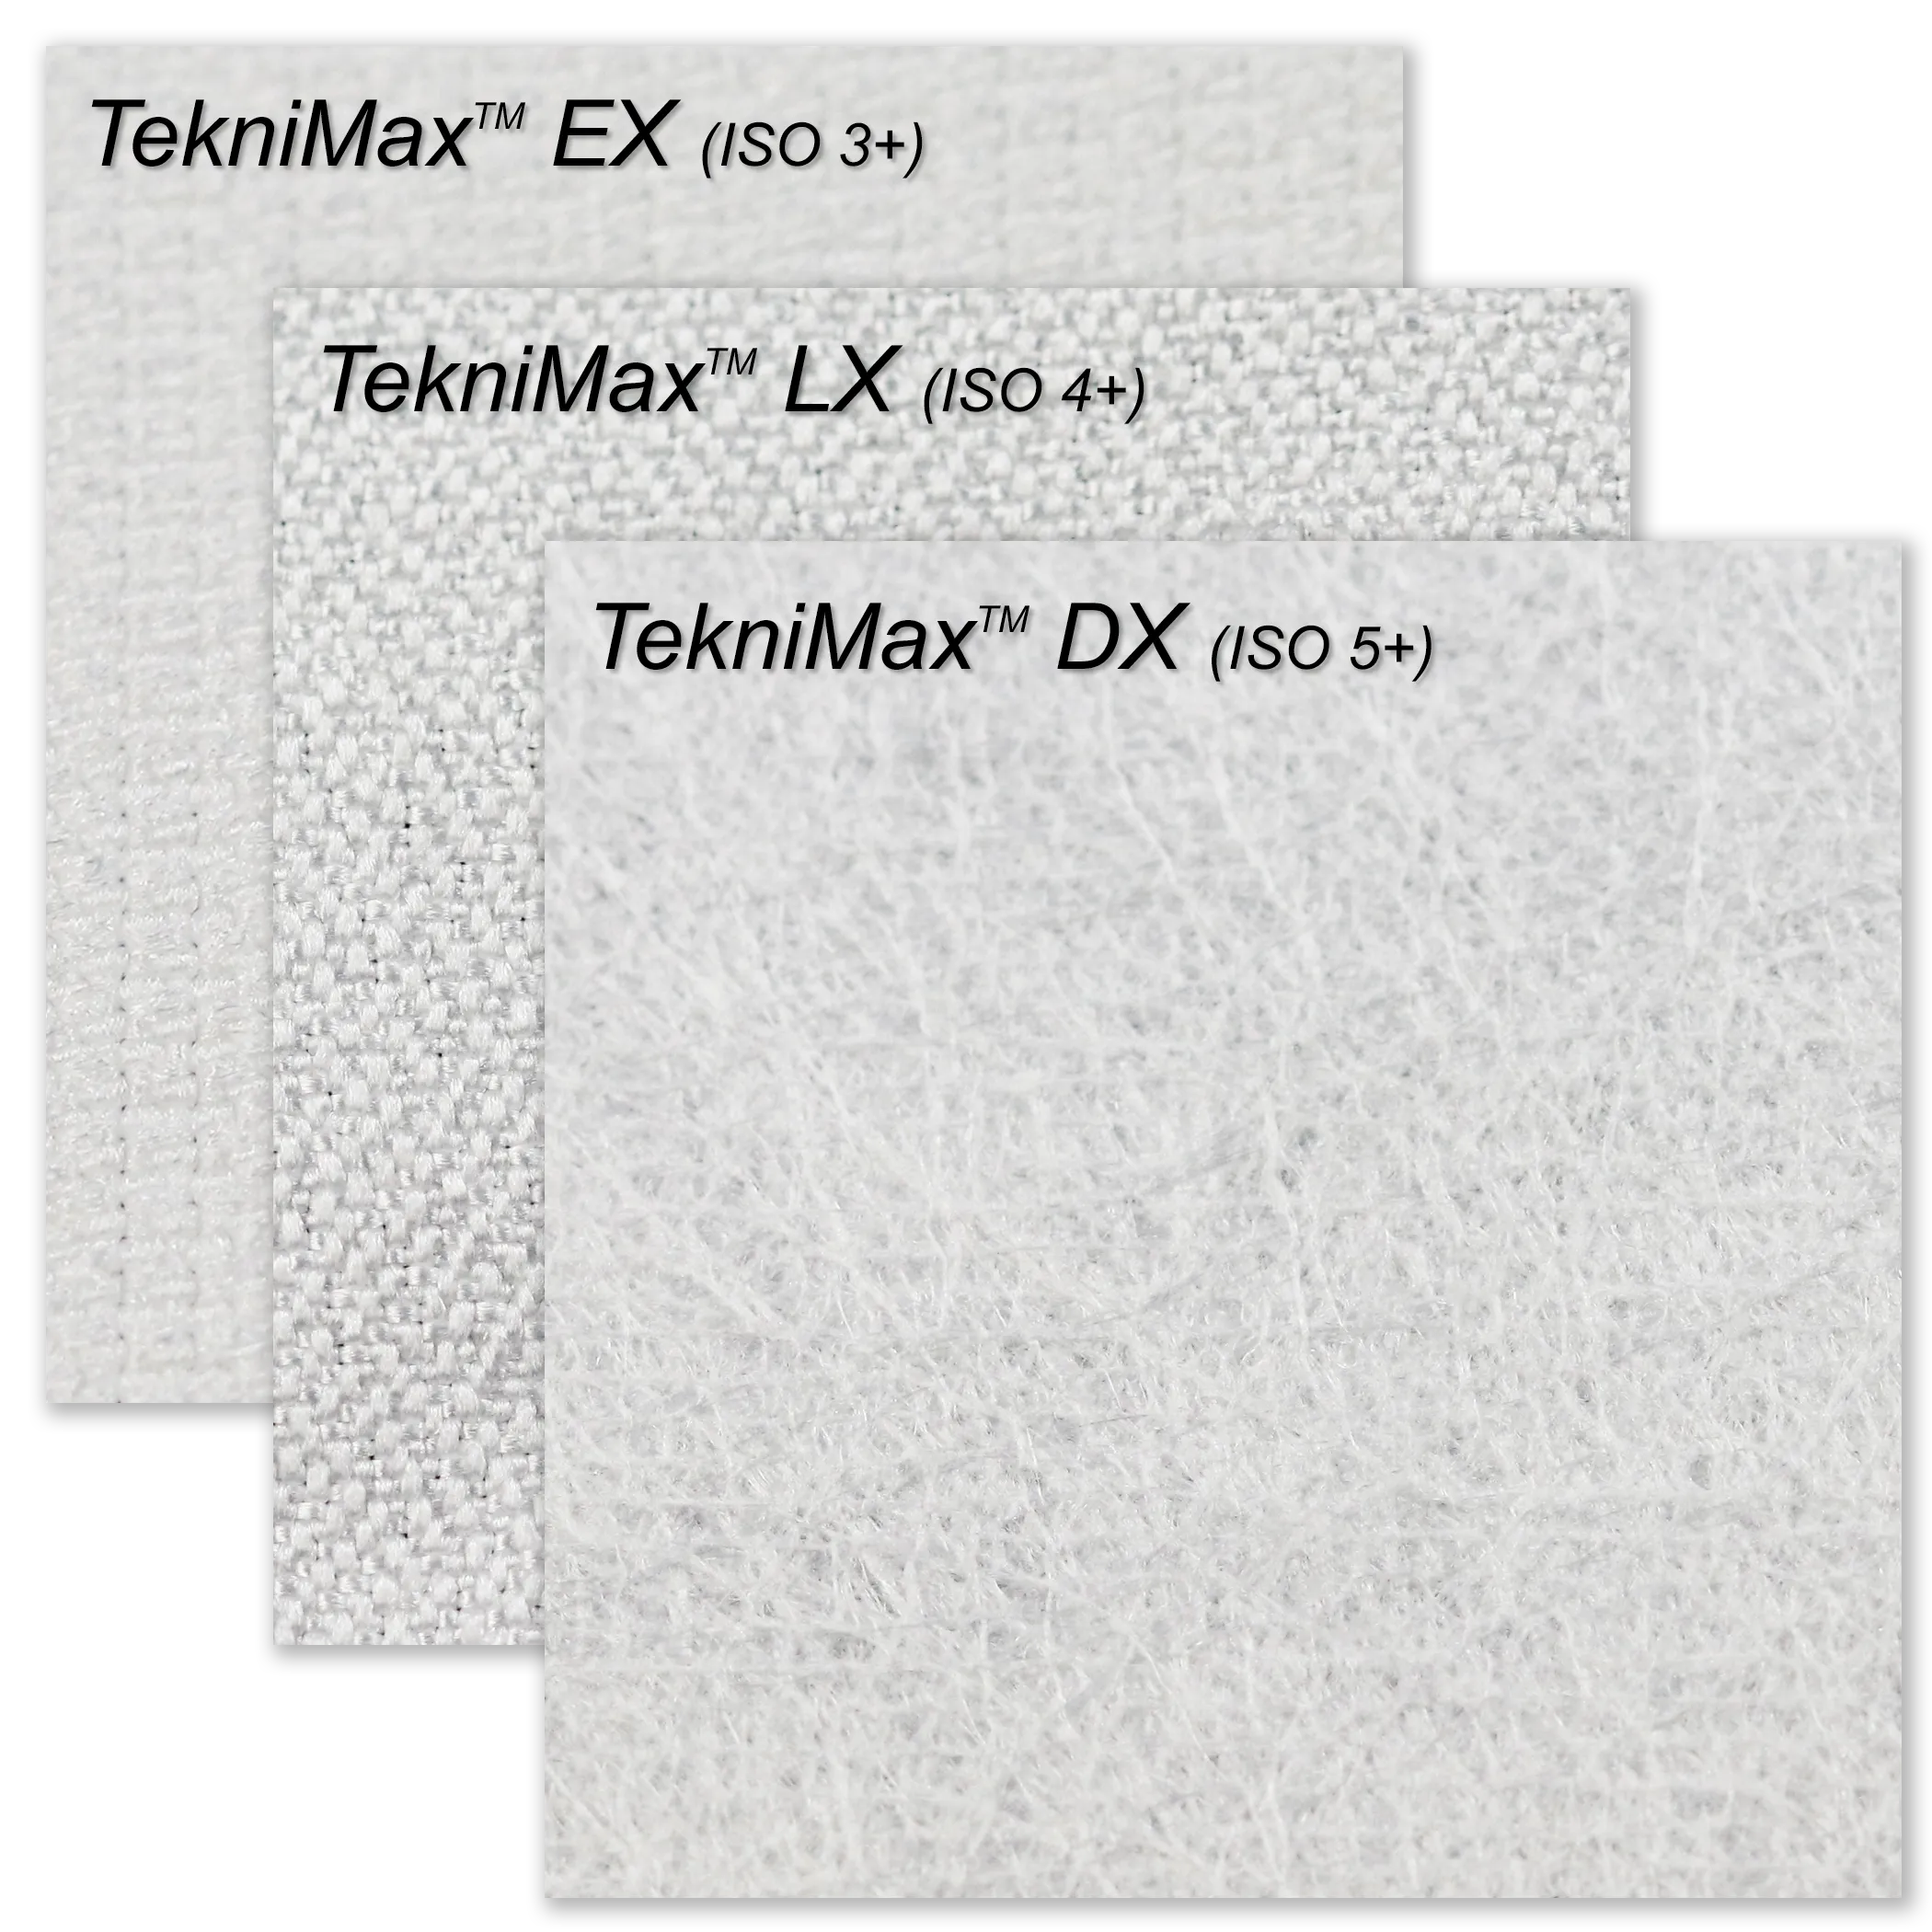 TekniMax Microfiber Wipers Family